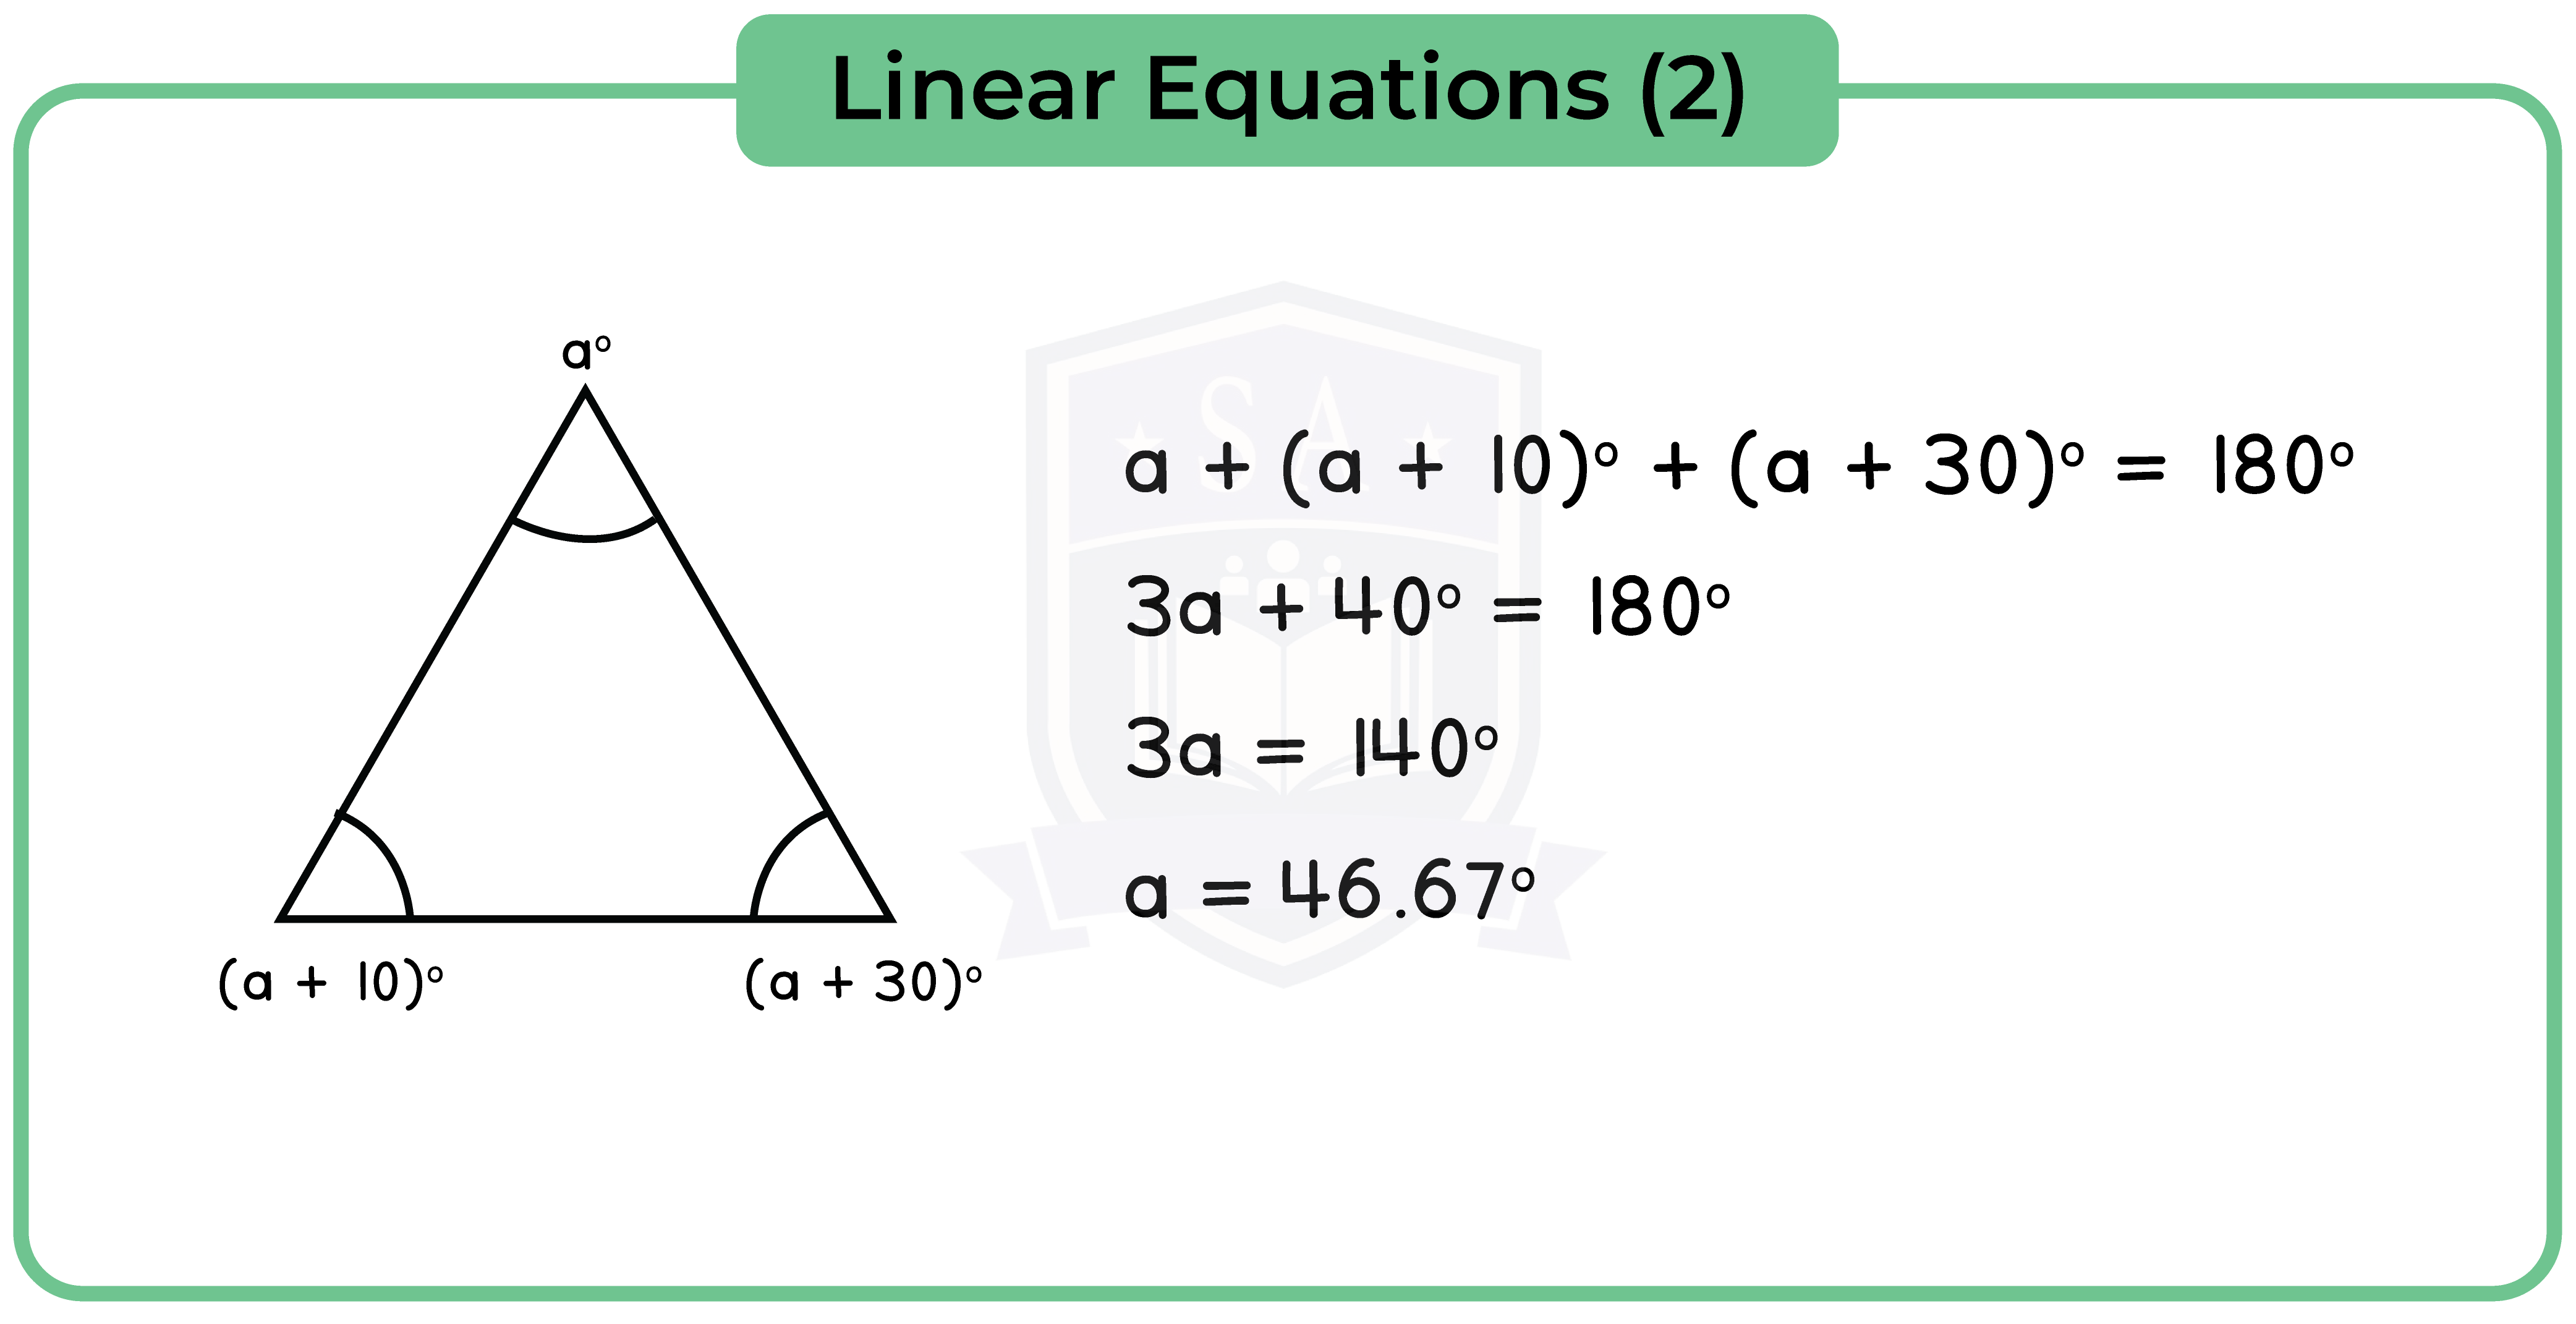 edexcel_igcse_mathematics a_topic 15_linear equations_002_Linear Equation (2)